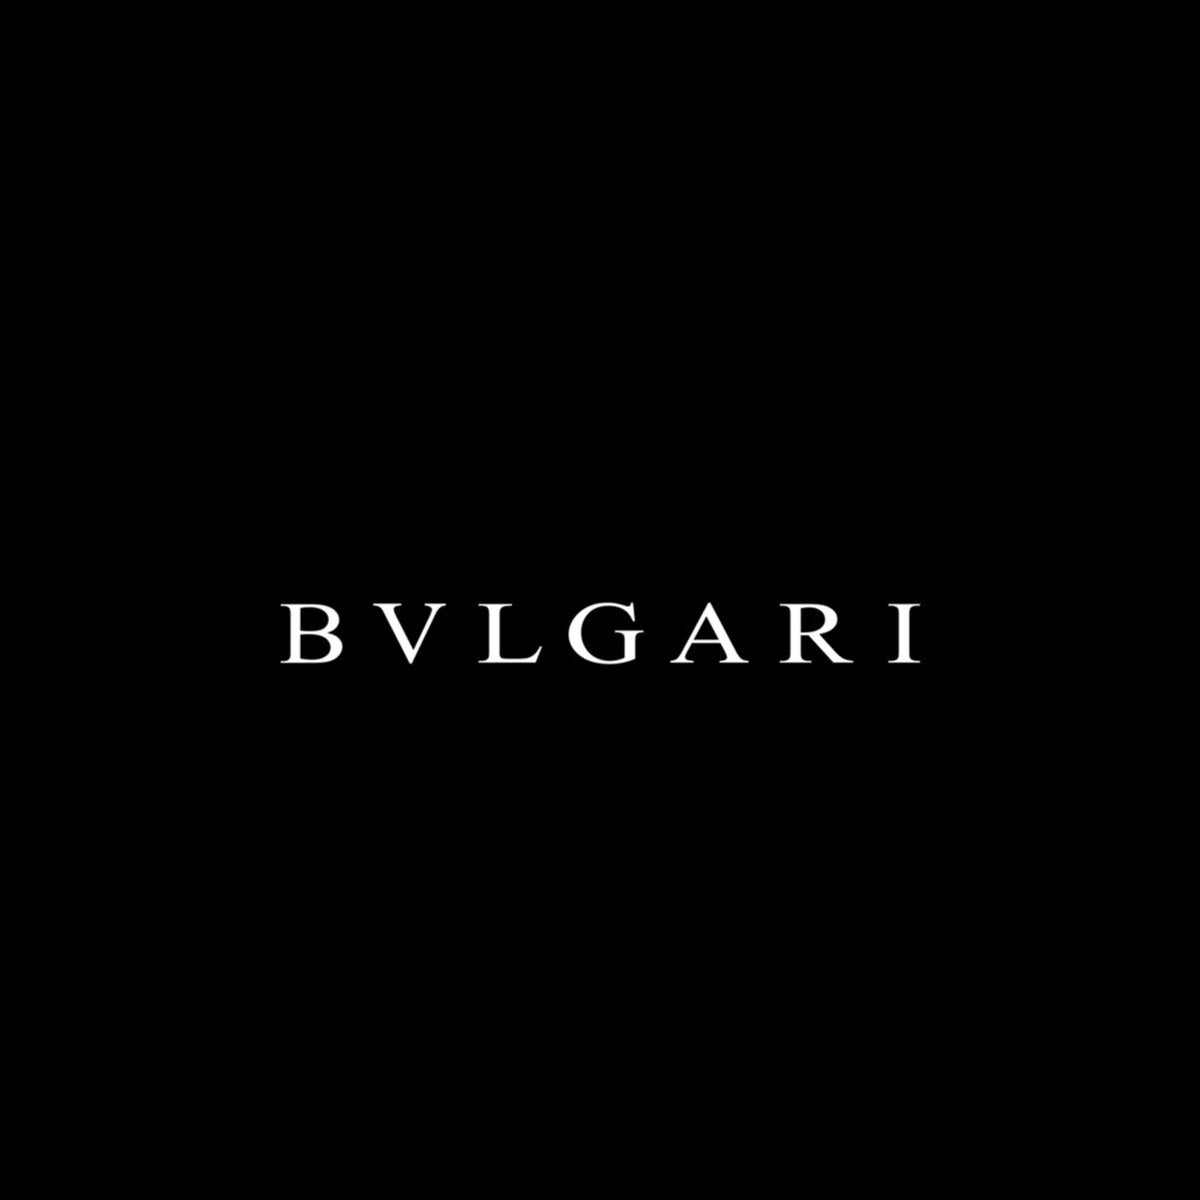 Bvlgari (בולגרי)